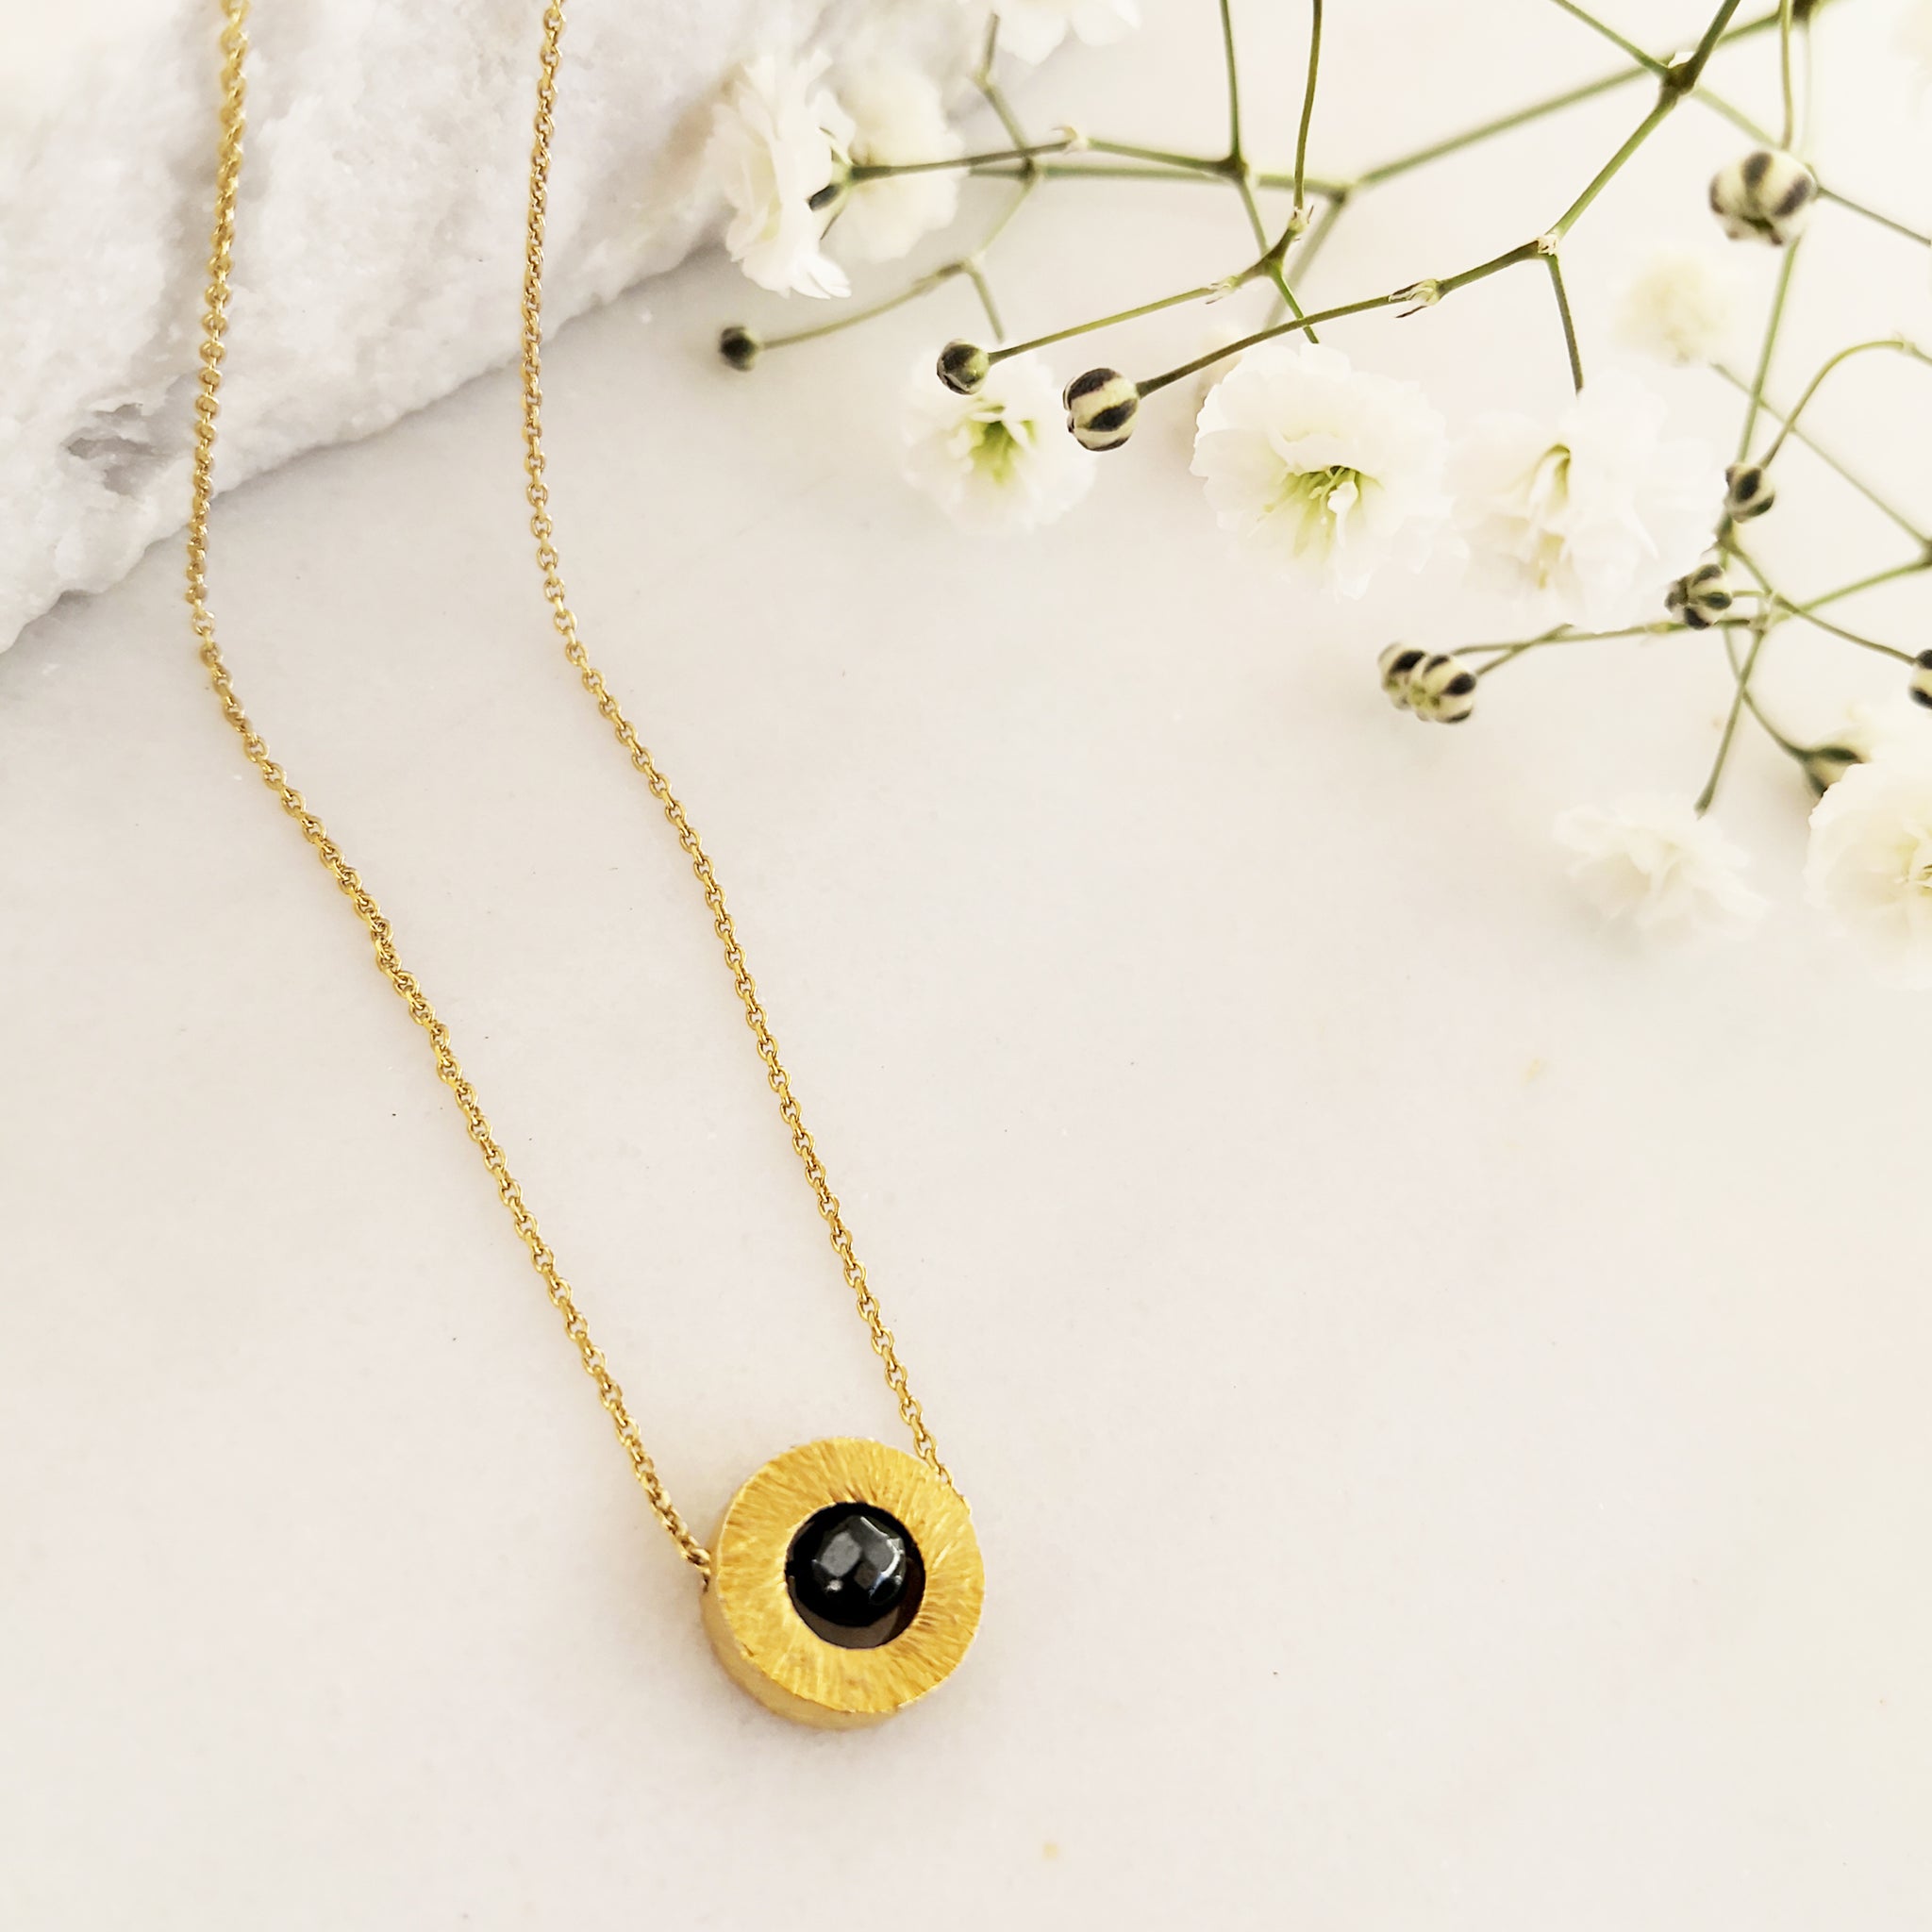 Minimal  Necklace with a dainty hematite gemstone